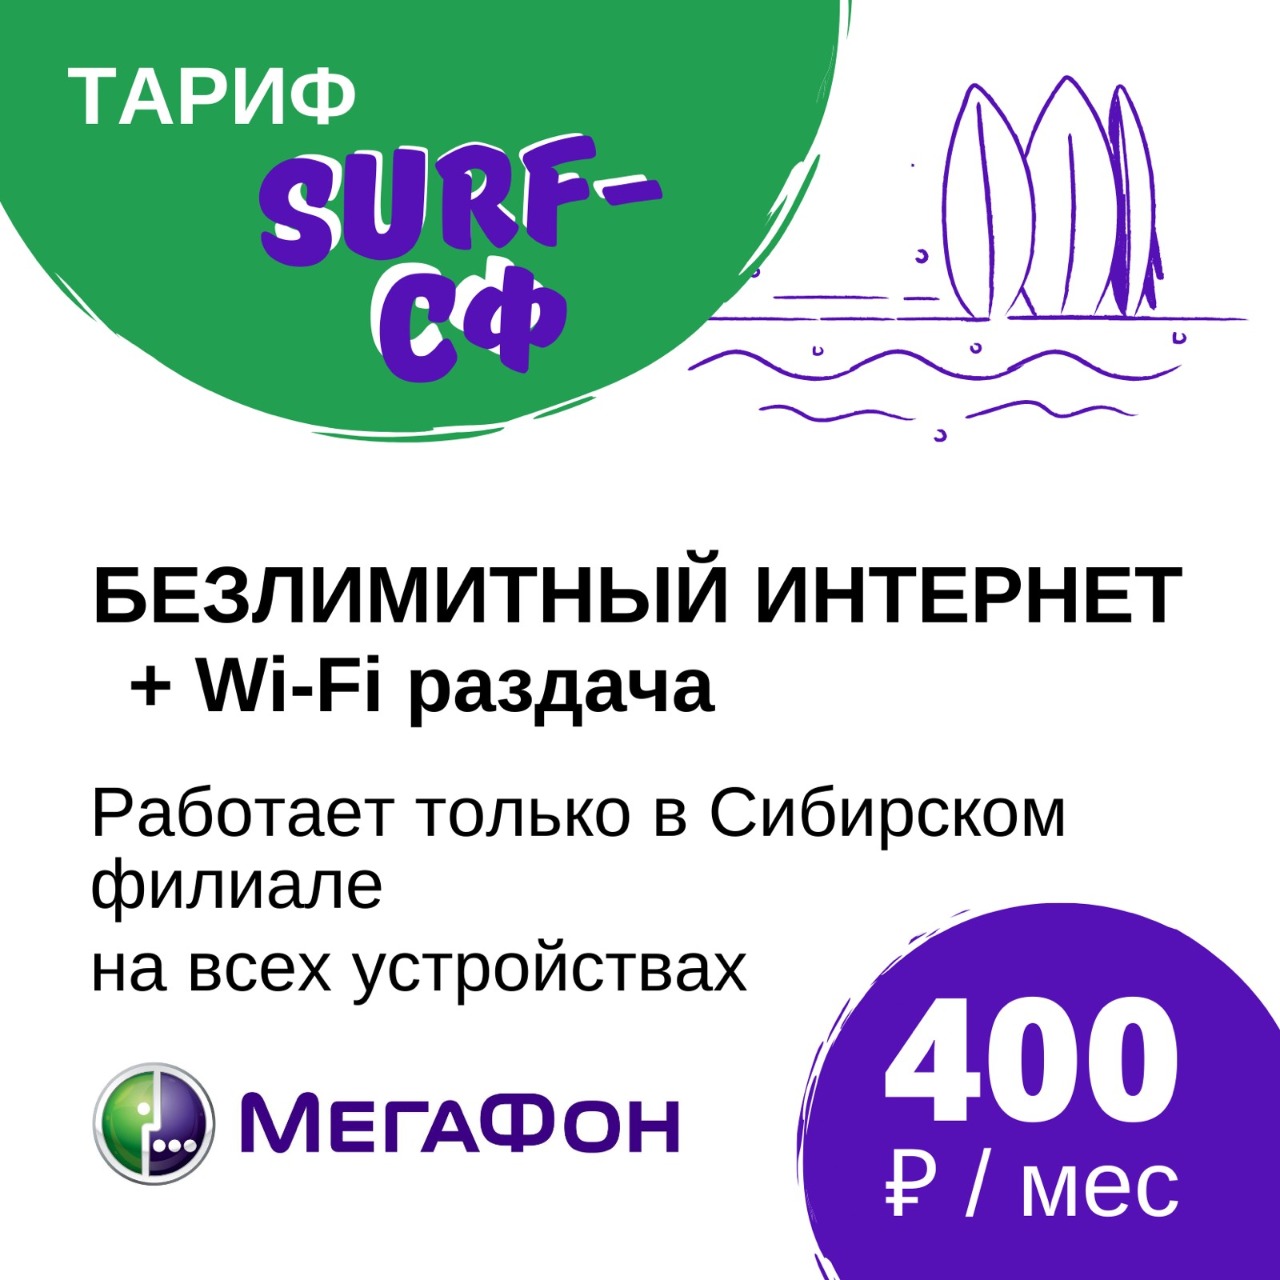 Саяногорск Инфо - whatsapp-image-2020-08-21-at-114743.jpeg, Скачано: 470